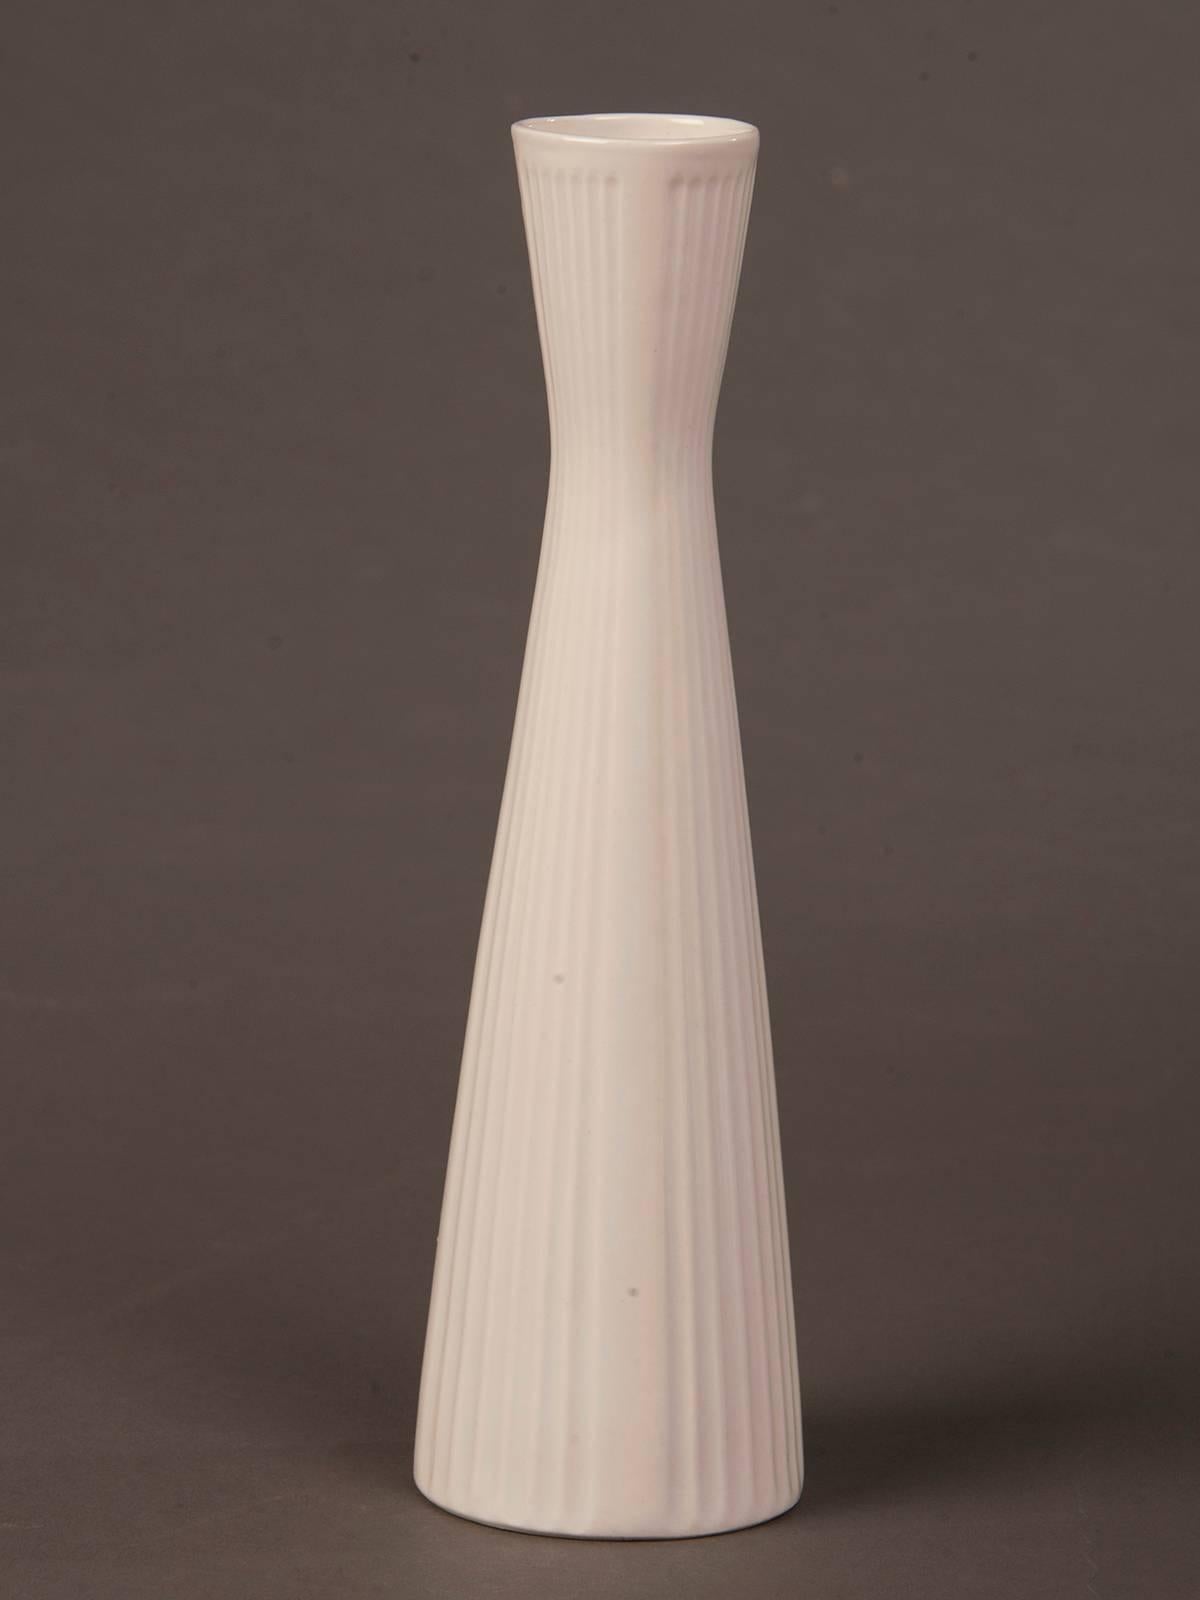 Vintage Mid-Century Modern German Porcelain Vase, Maker's Mark, circa 1950 1